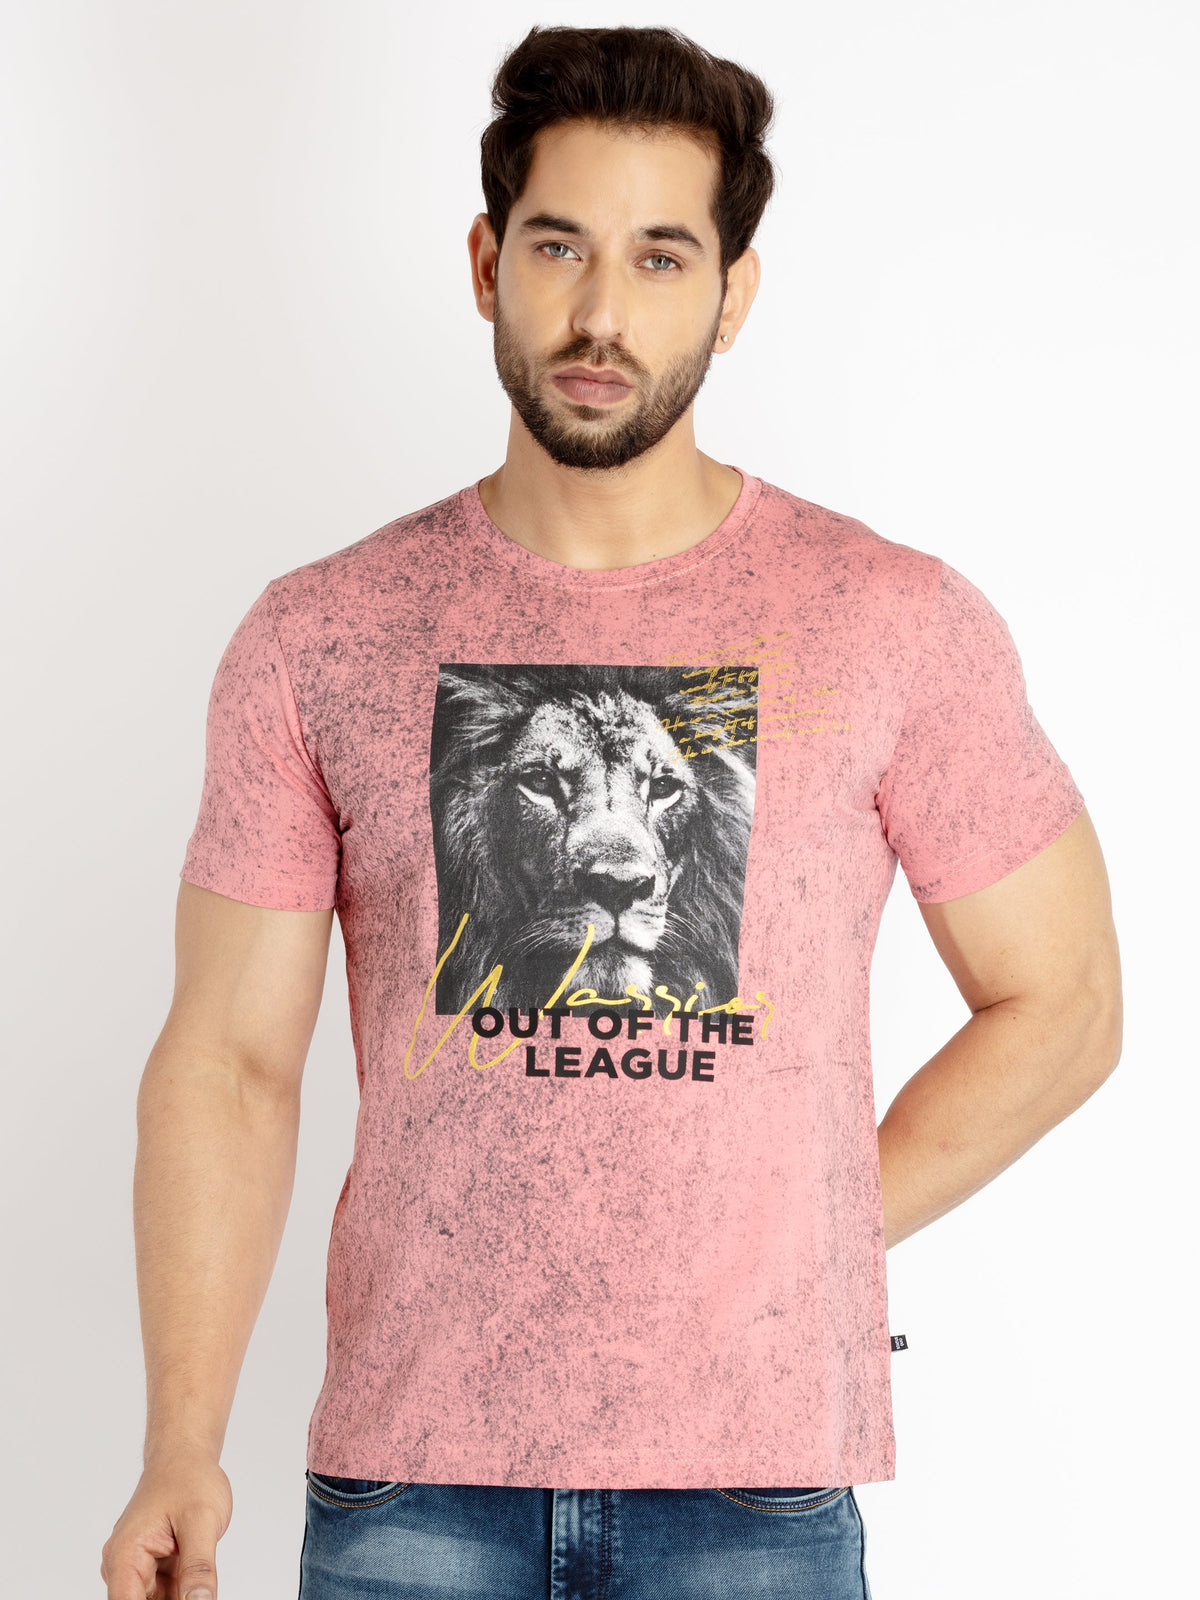 Status Quo |Men's T-shirt - S, M, L, XL, XXL